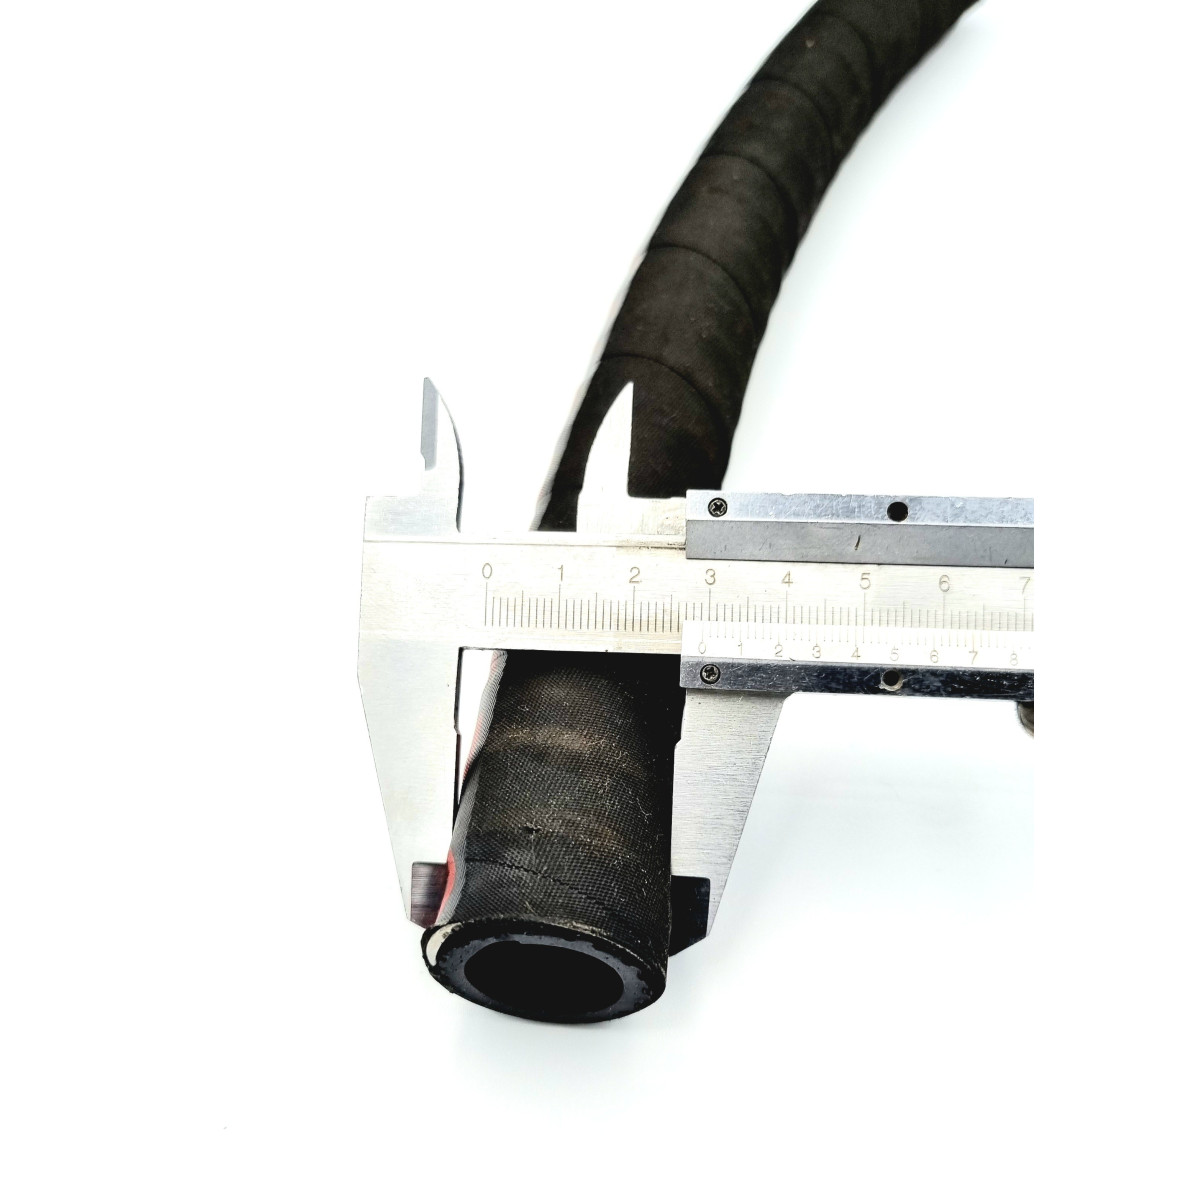 Les colliers du tuyau flexible, tube en acier inoxydable 304